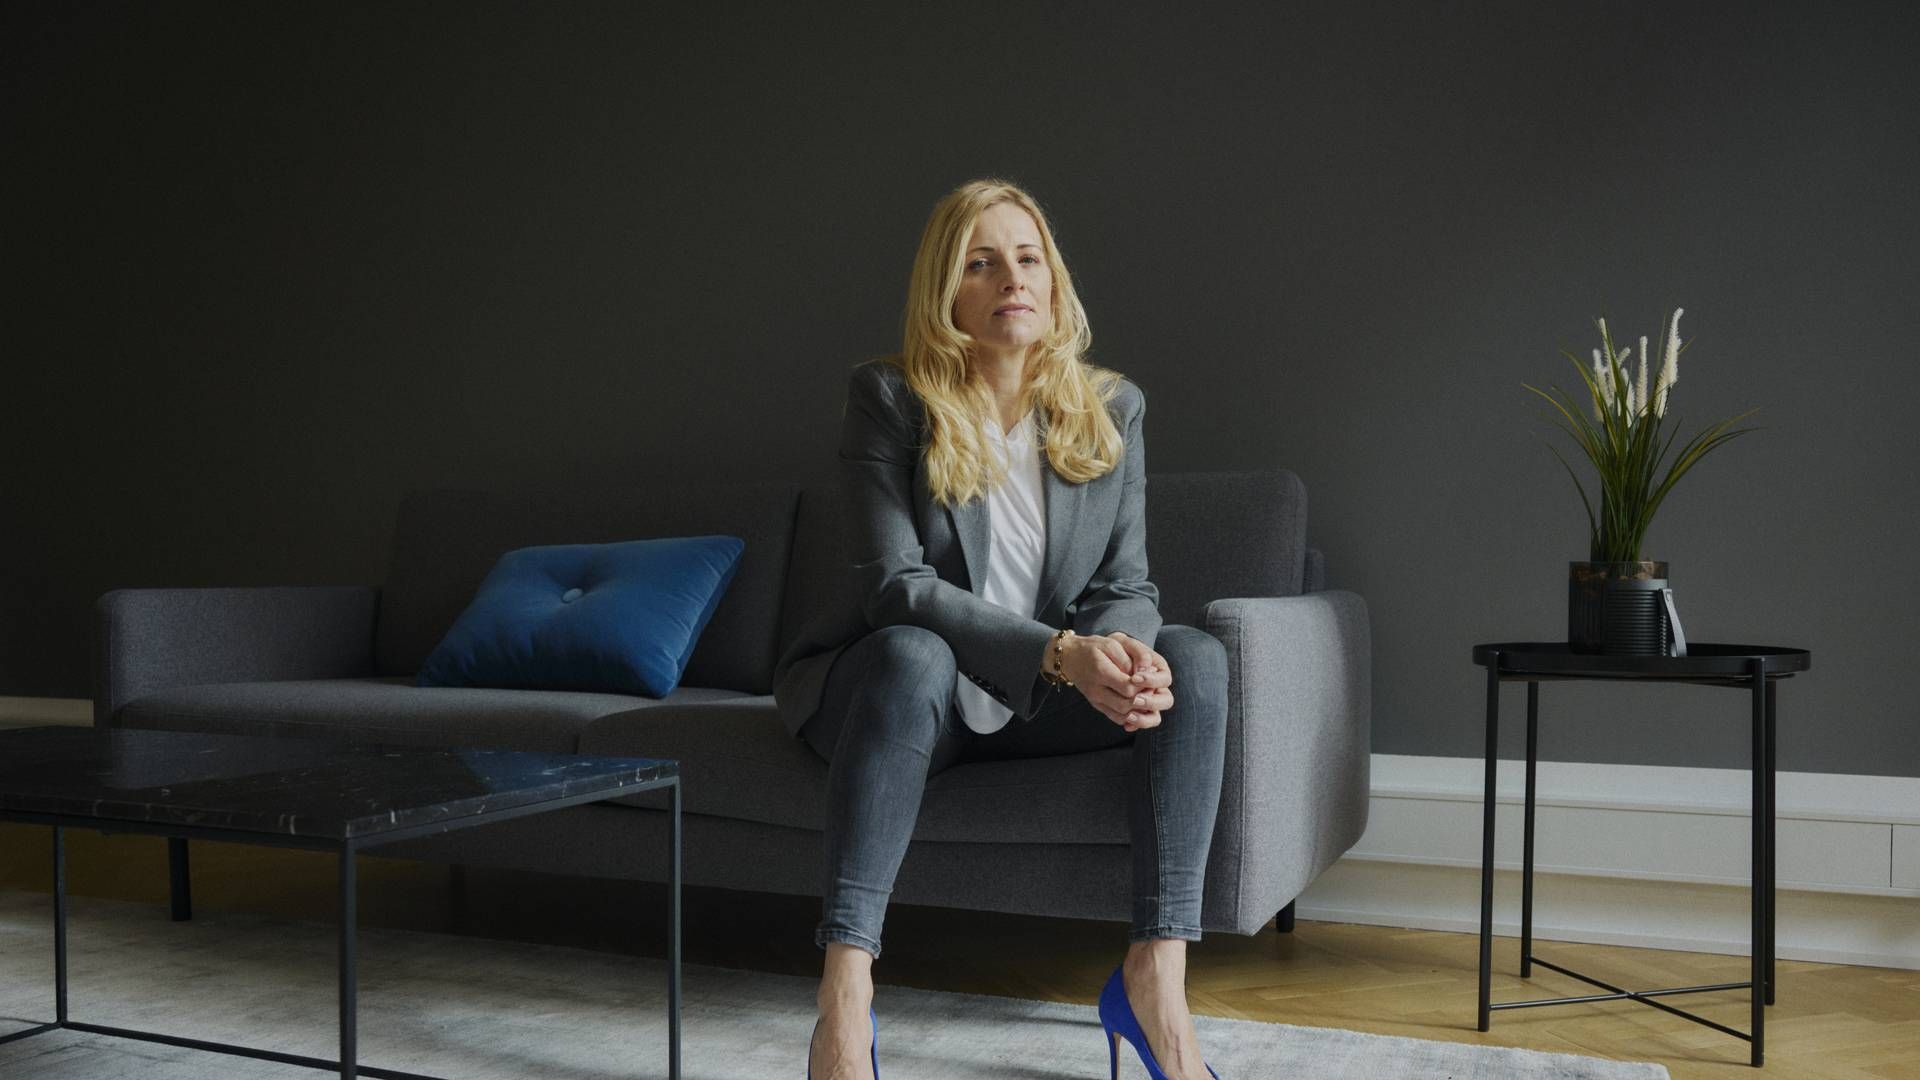 Karina Rothoff Brix, Firis danske sjef, frykter ikke dagens kryptomarked. | Foto: PR/Firi